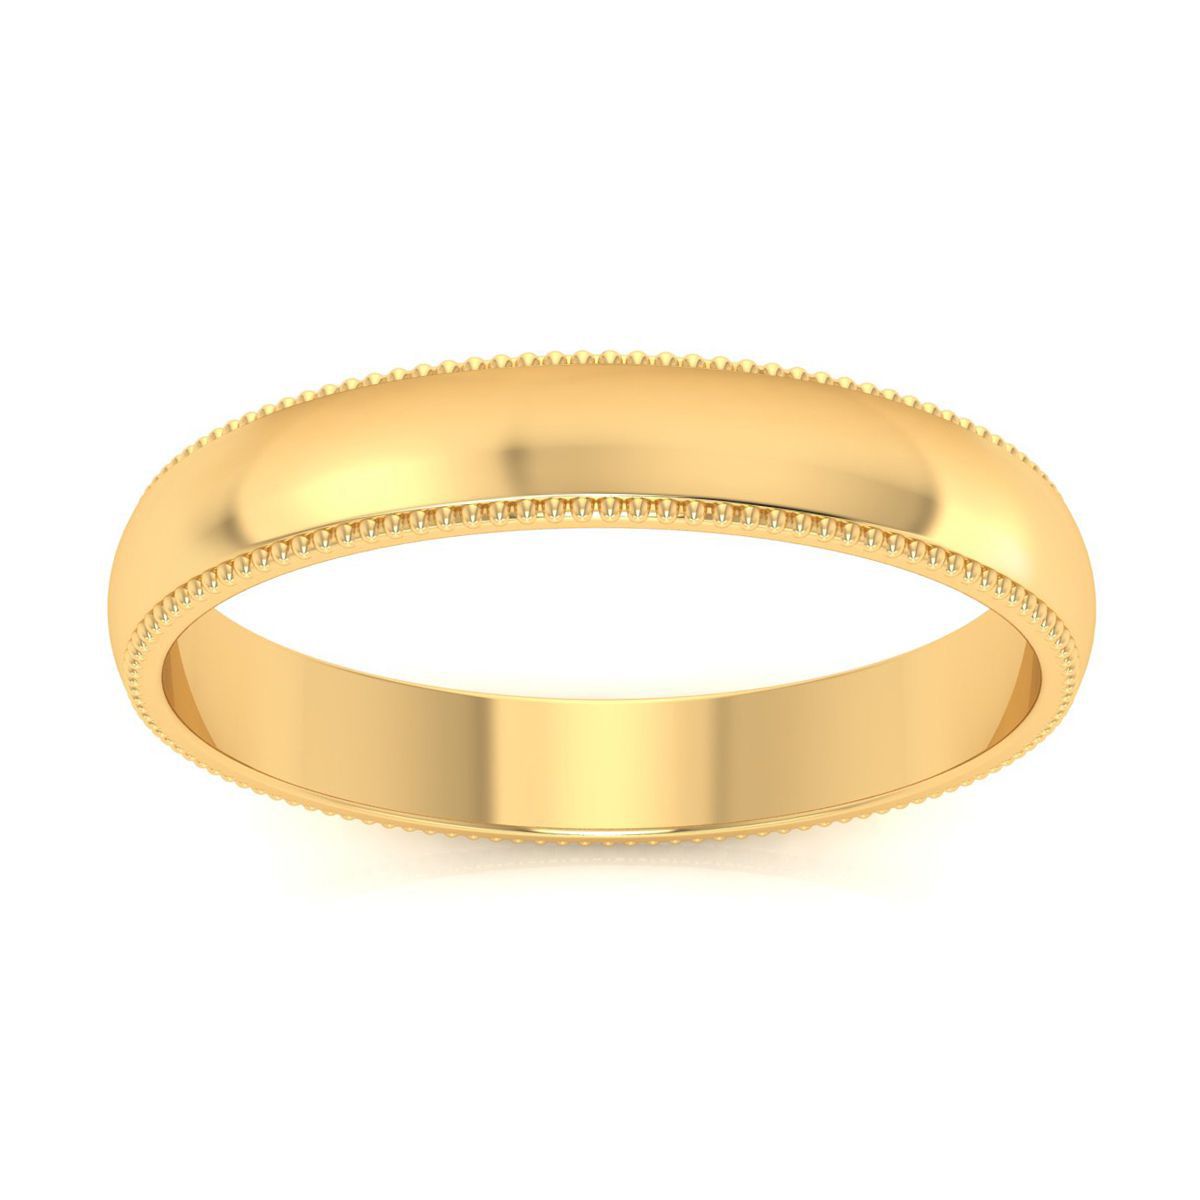 Super Jeweler Men Accessories Jewelry Rings 14K 3MM Heavy Milgrain Ladies & Mens Wedding Band 2.2 g 